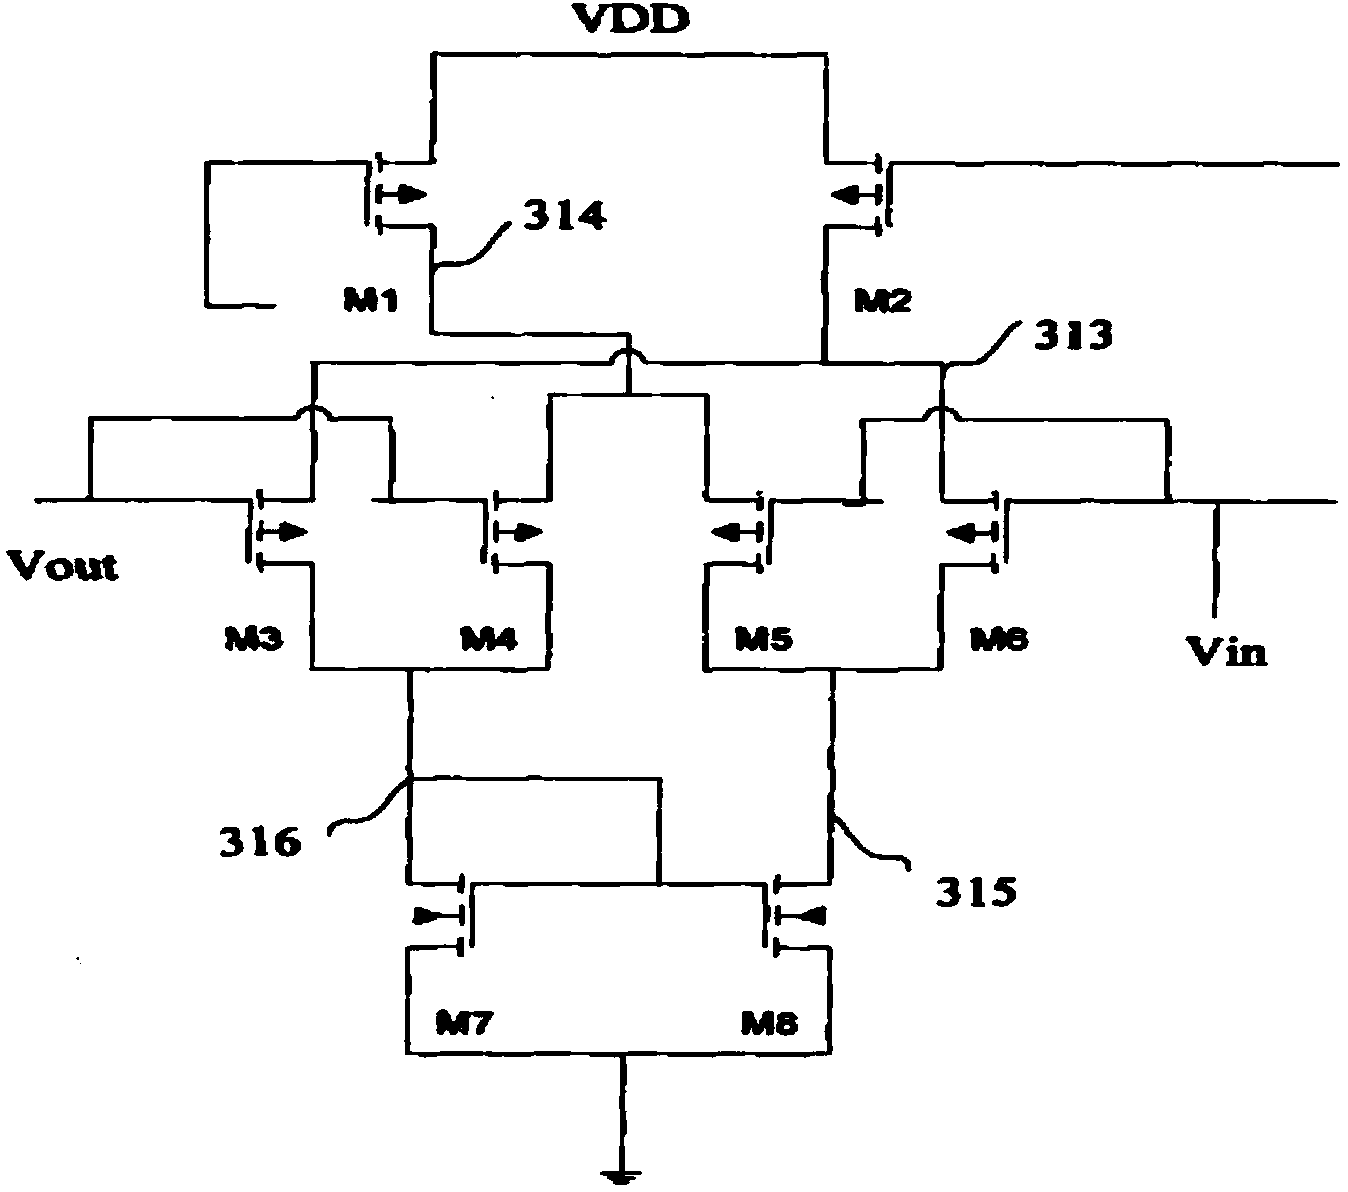 Operational amplifier